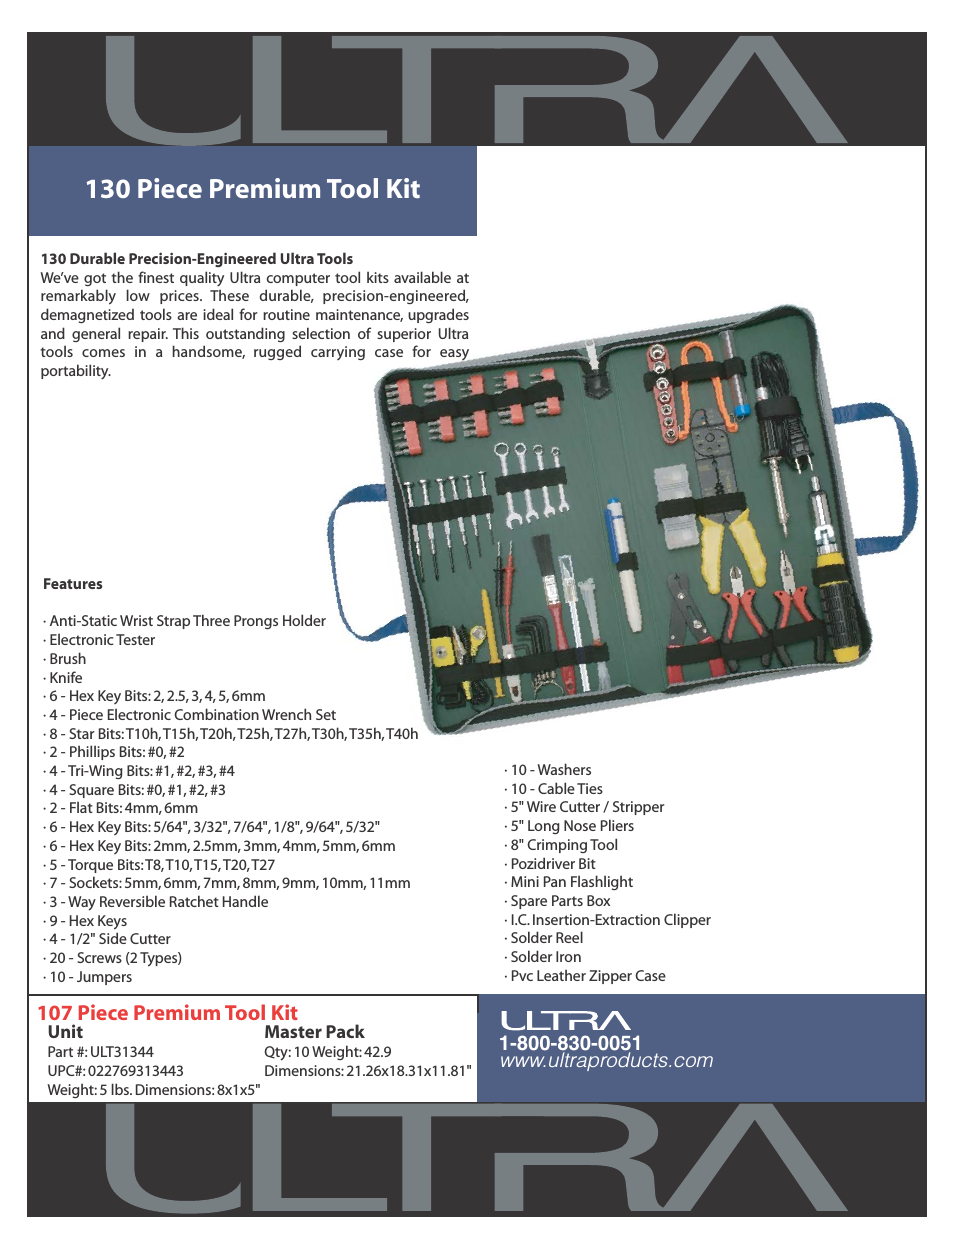 130 Piece Premium Tool Kit ULT31344